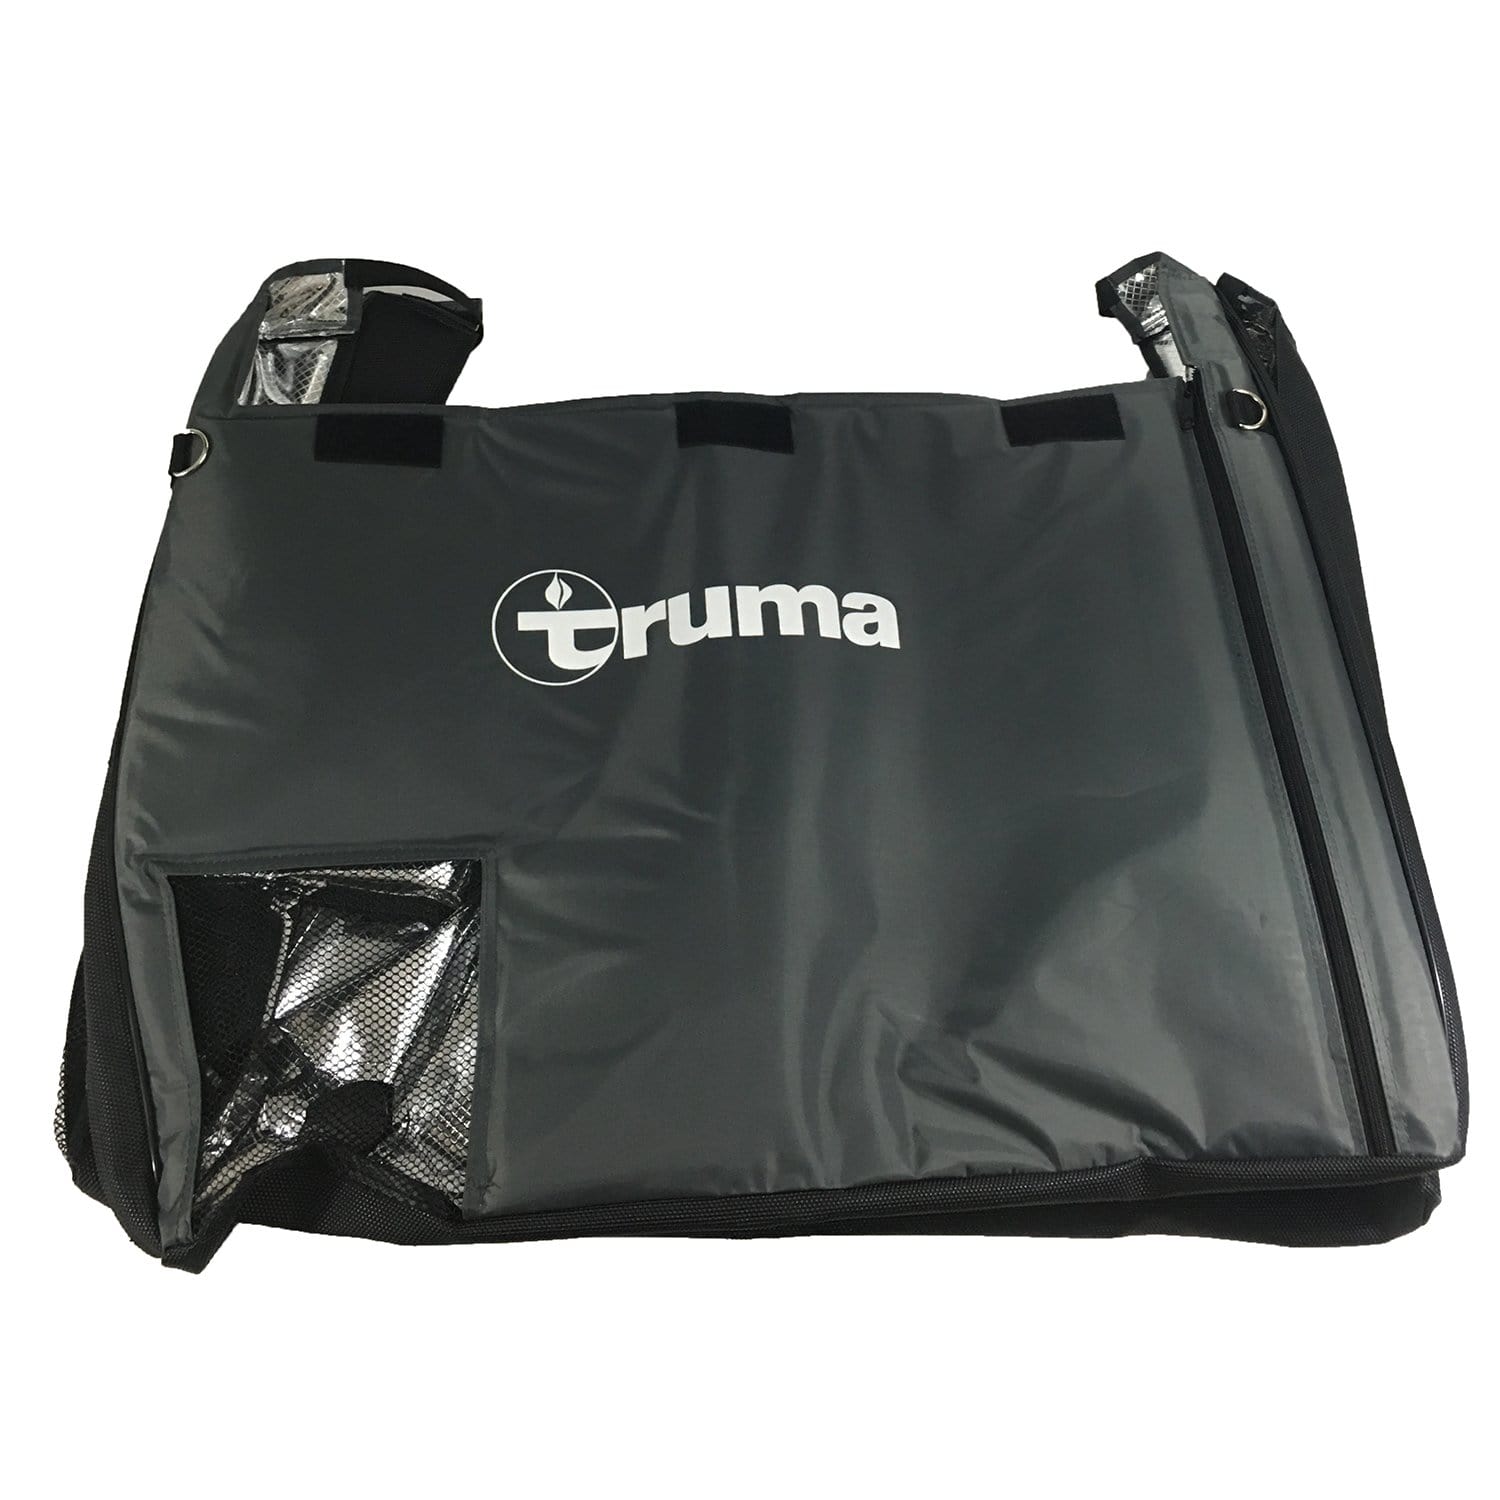 Truma 40955-05 Truma Insulated Cooler Cover for C73 and C69DZ